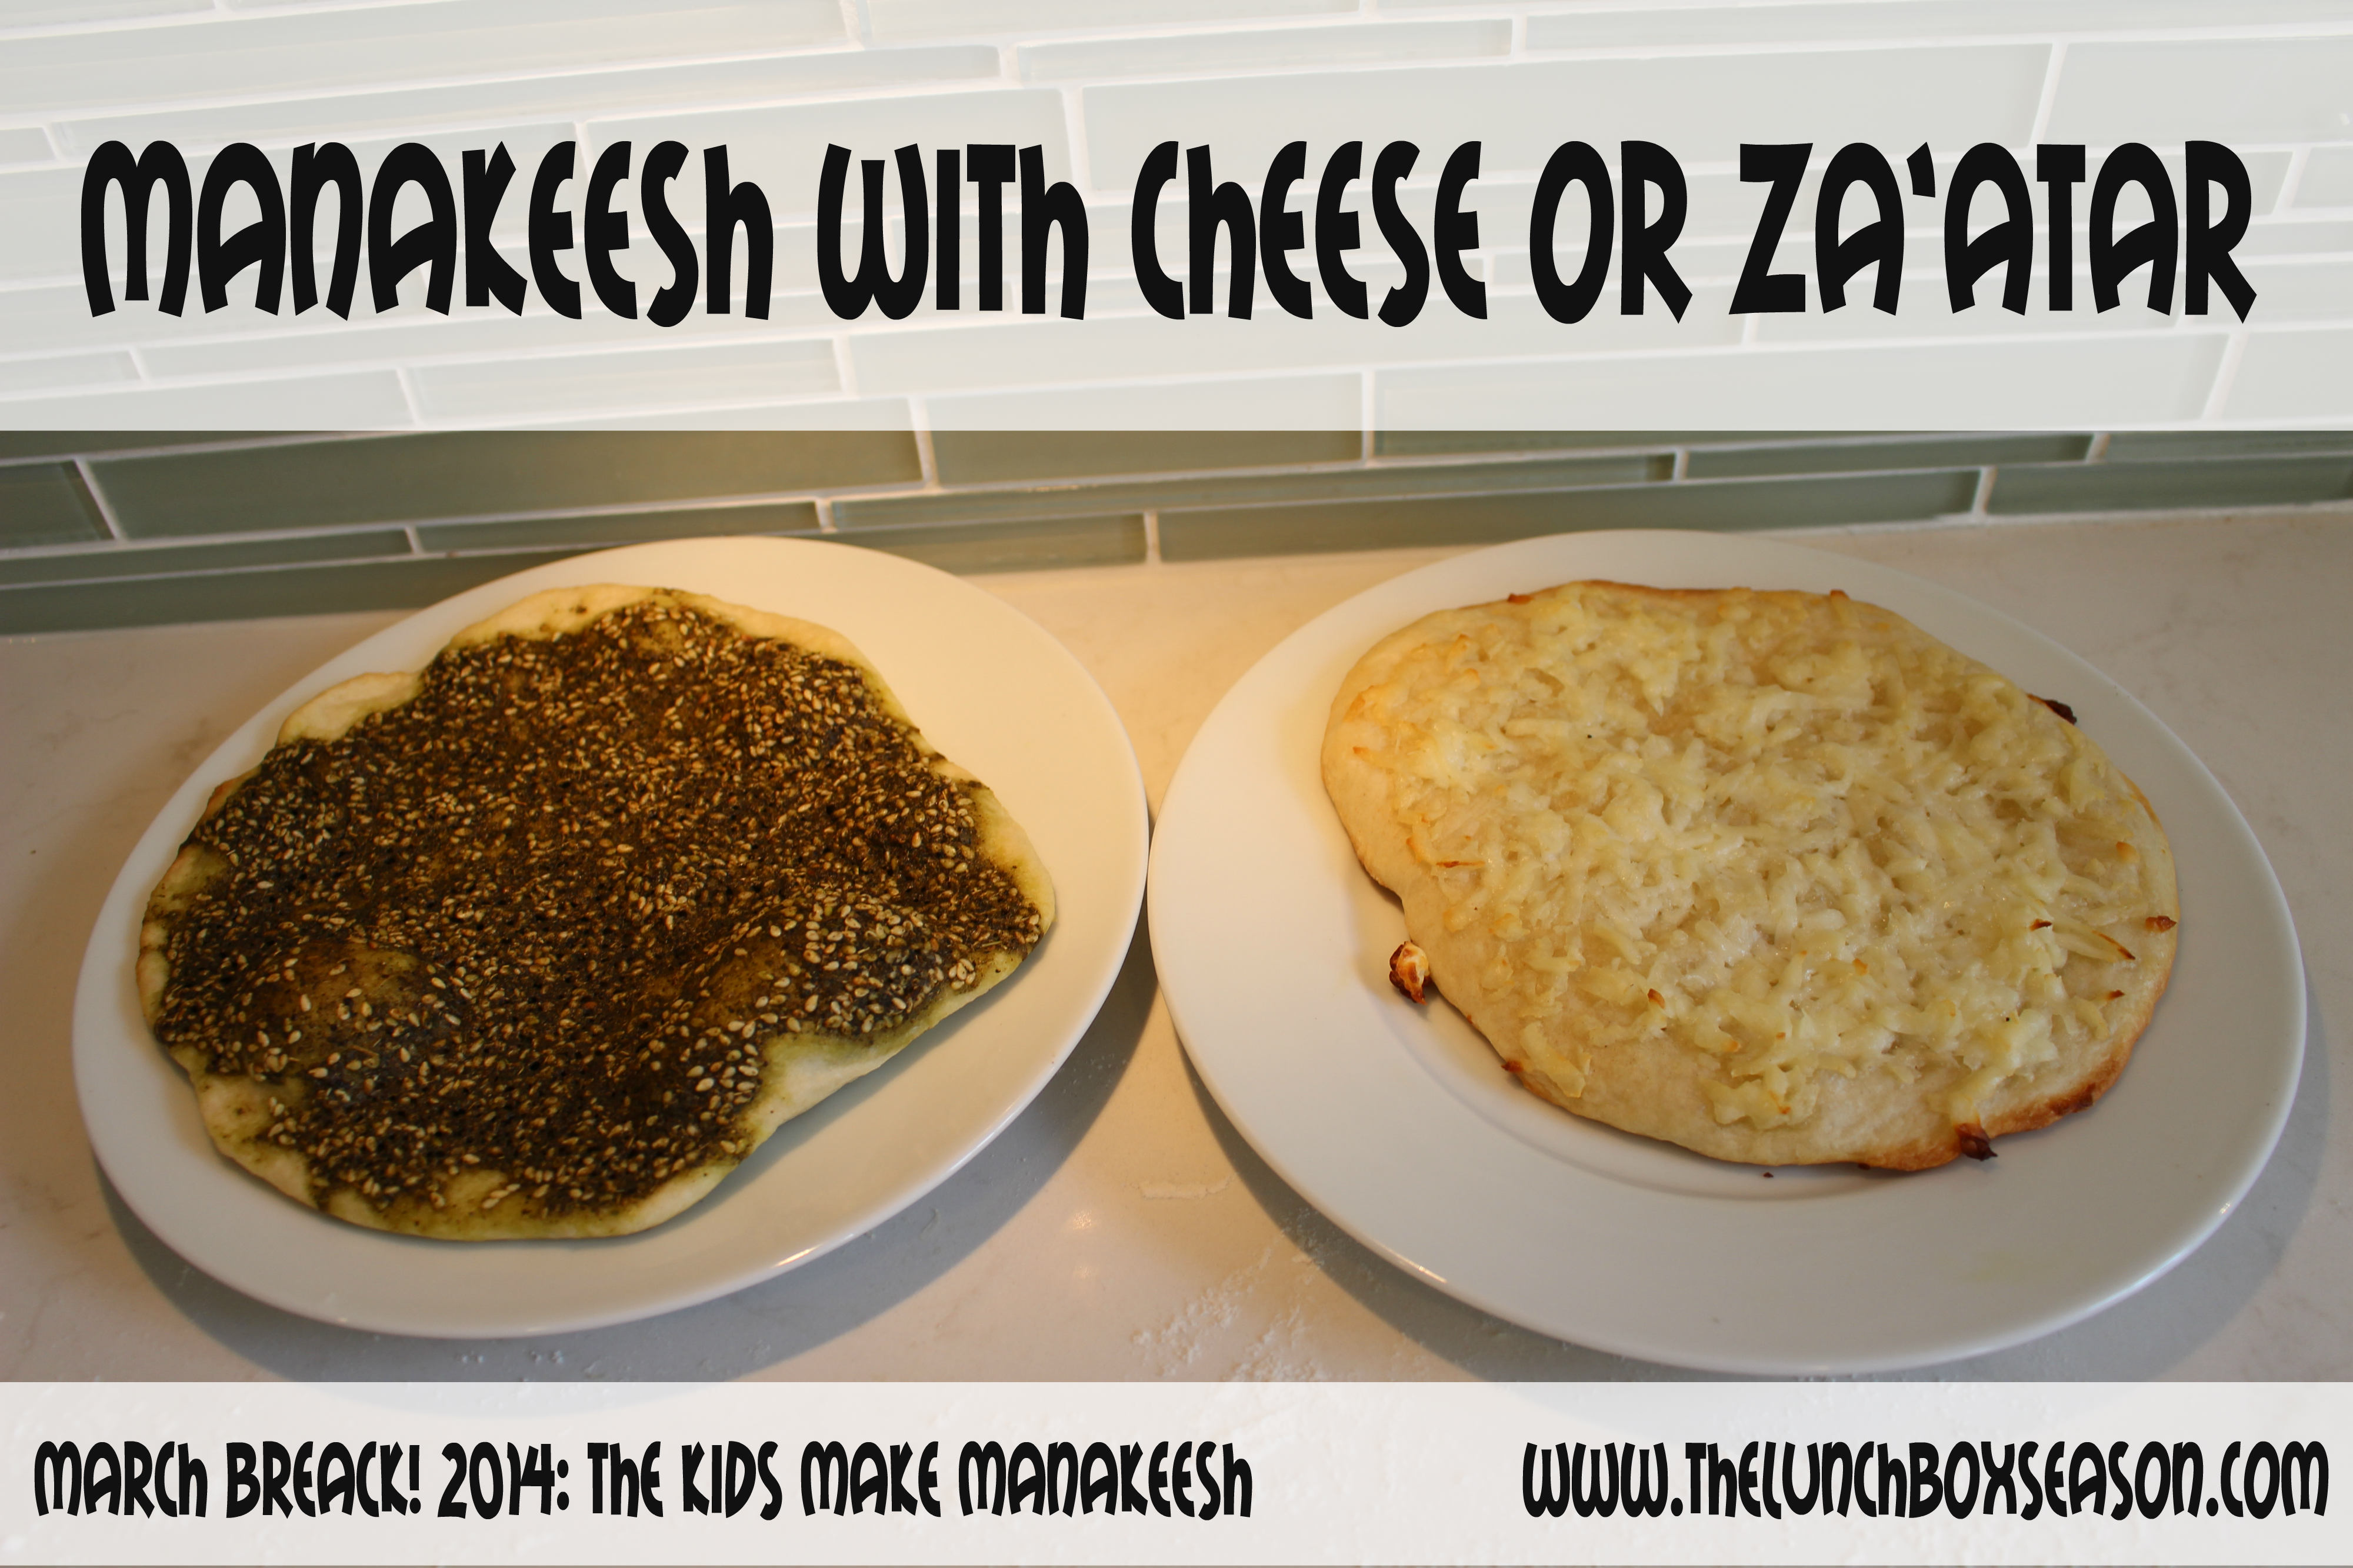 Manakeesh [Manakish] with Cheese or Za'atar